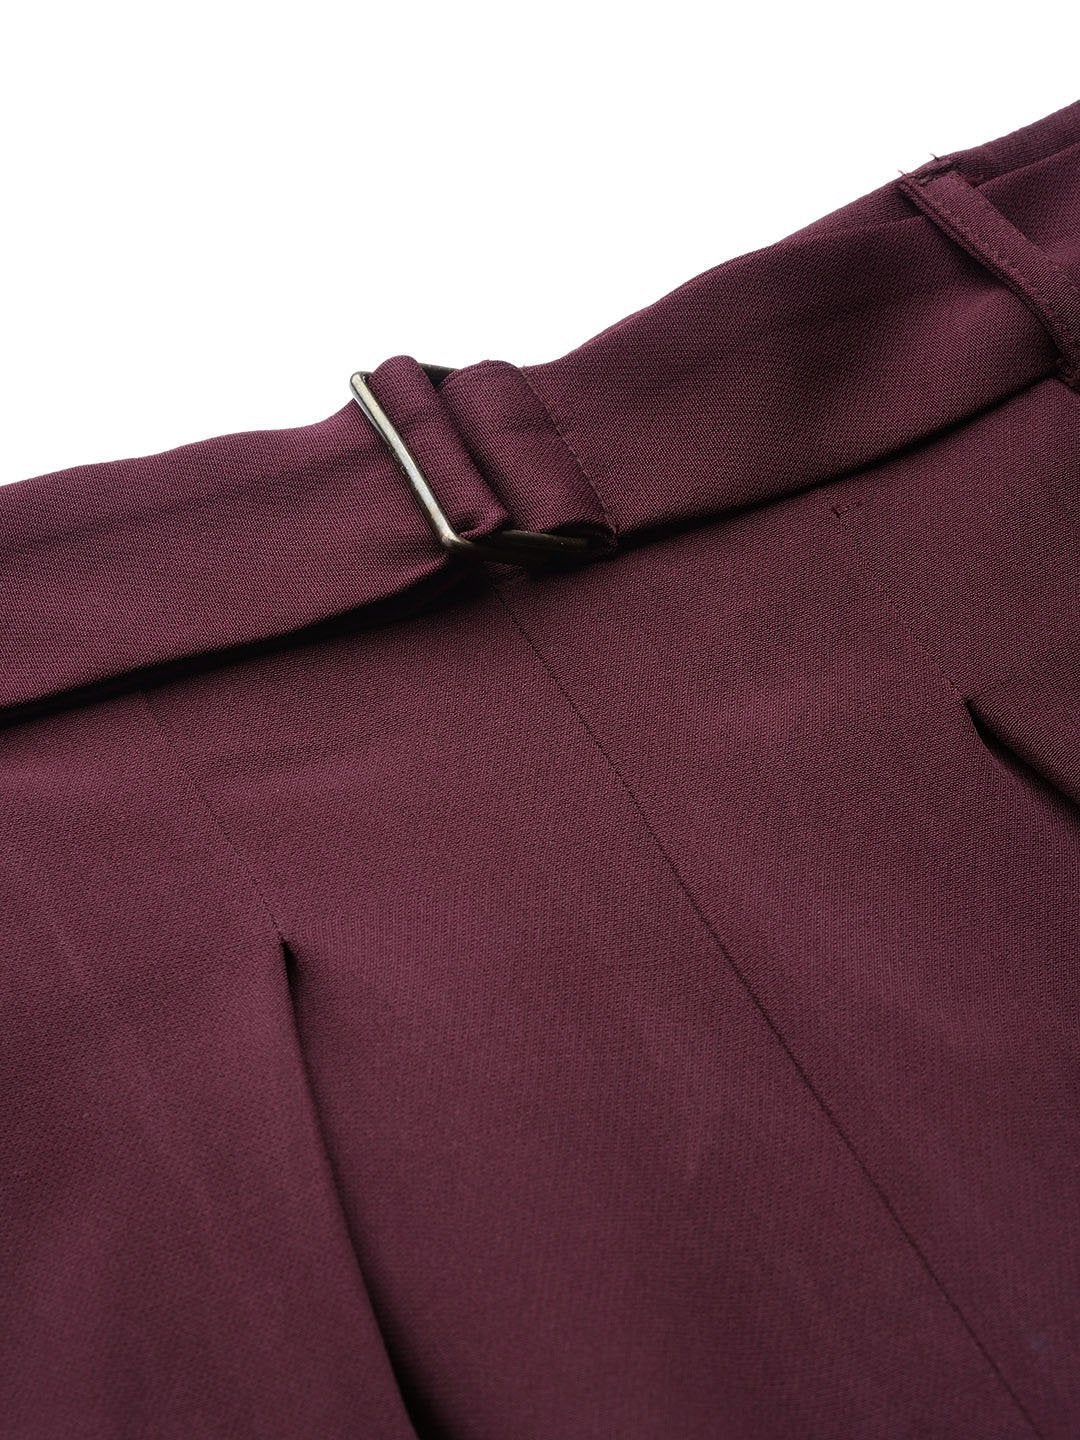 Women's Burgundy Front Pleat Tapered Pants - SASSAFRAS